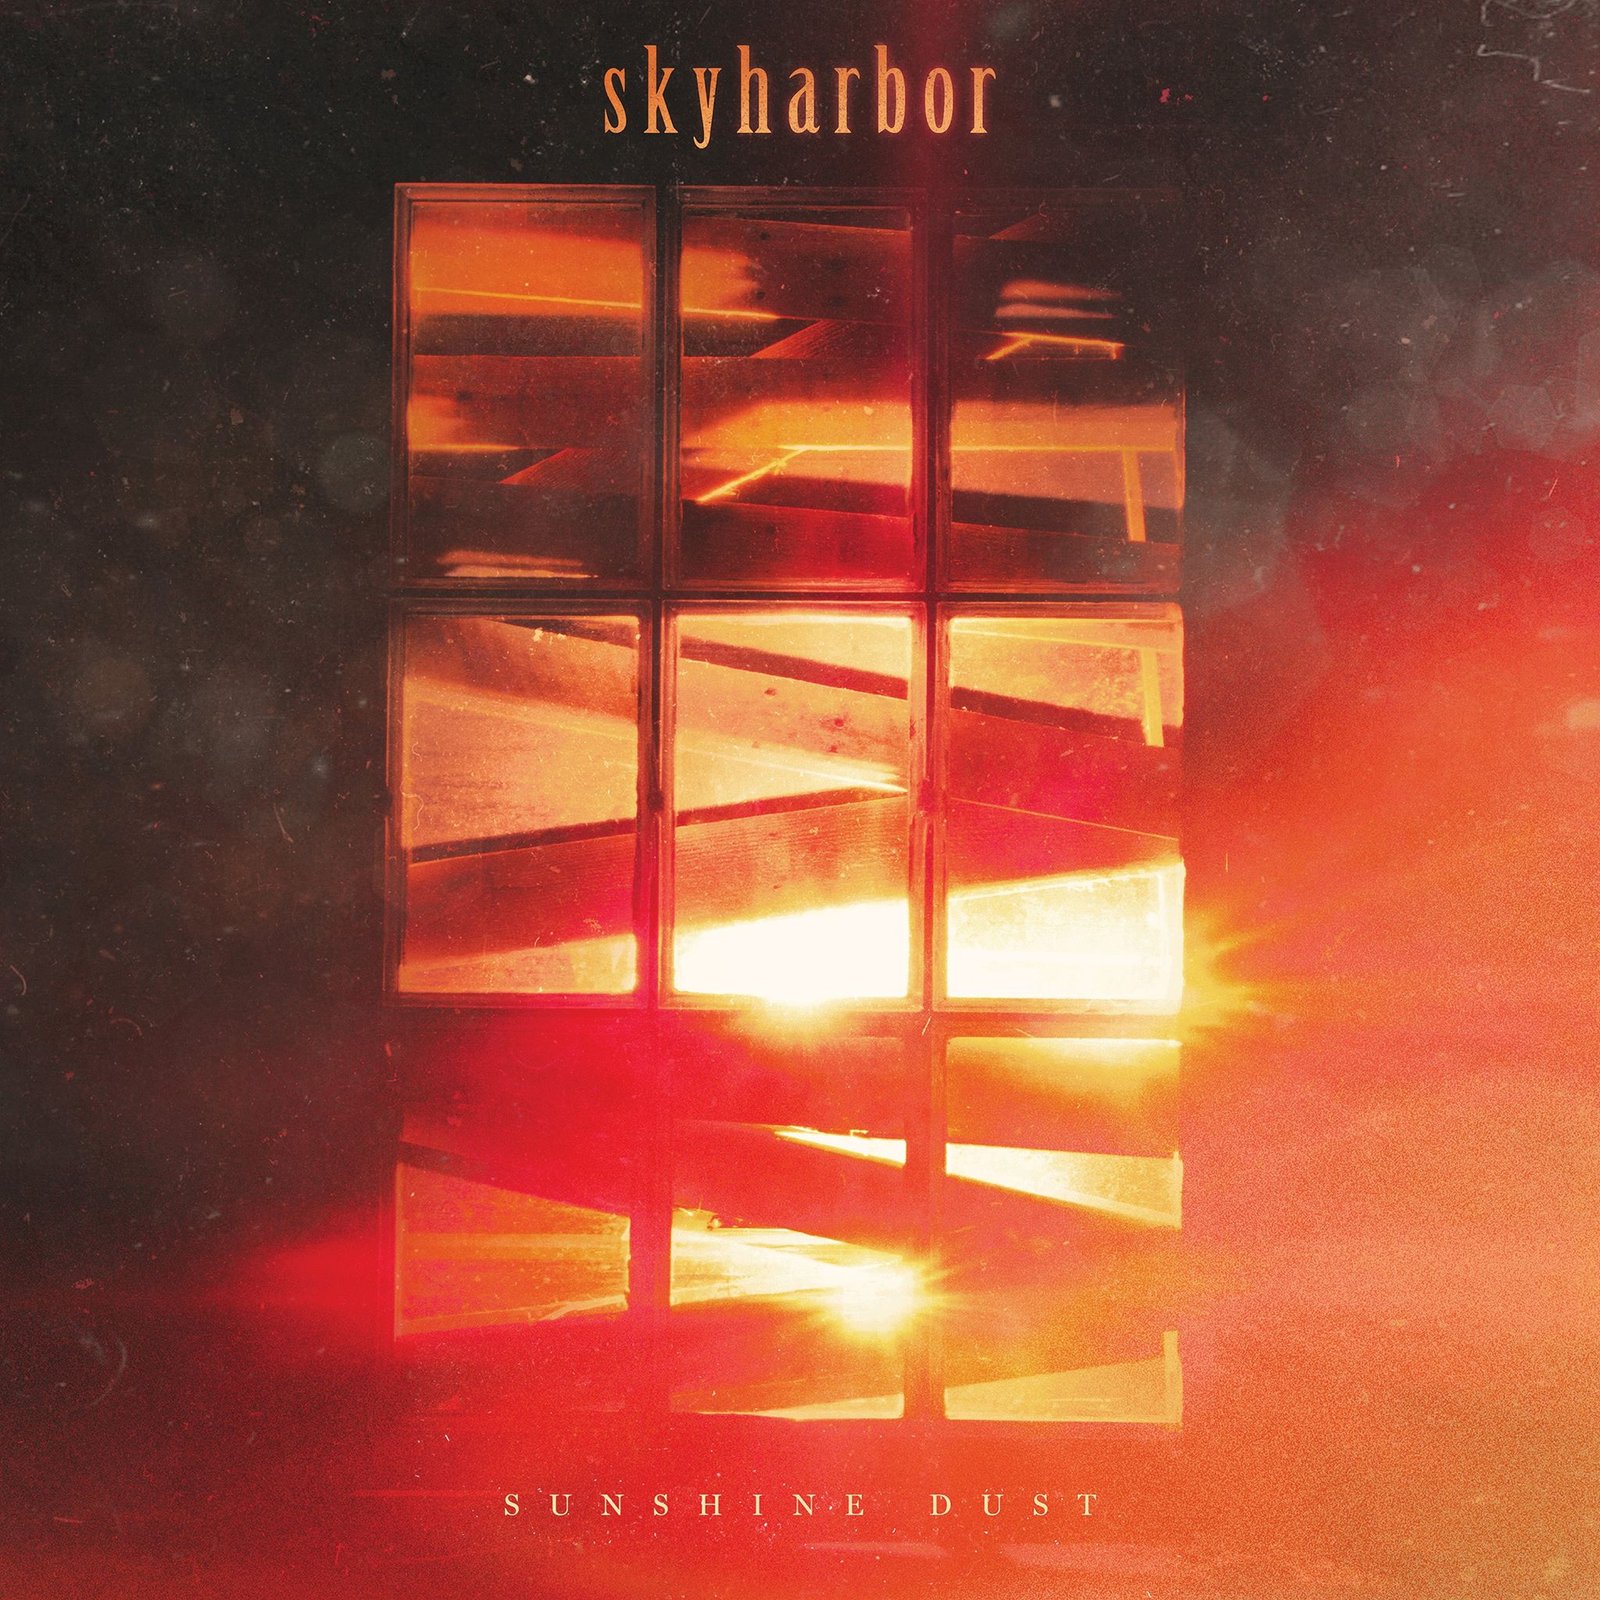 Skyharbor – “Sunshine Dust”